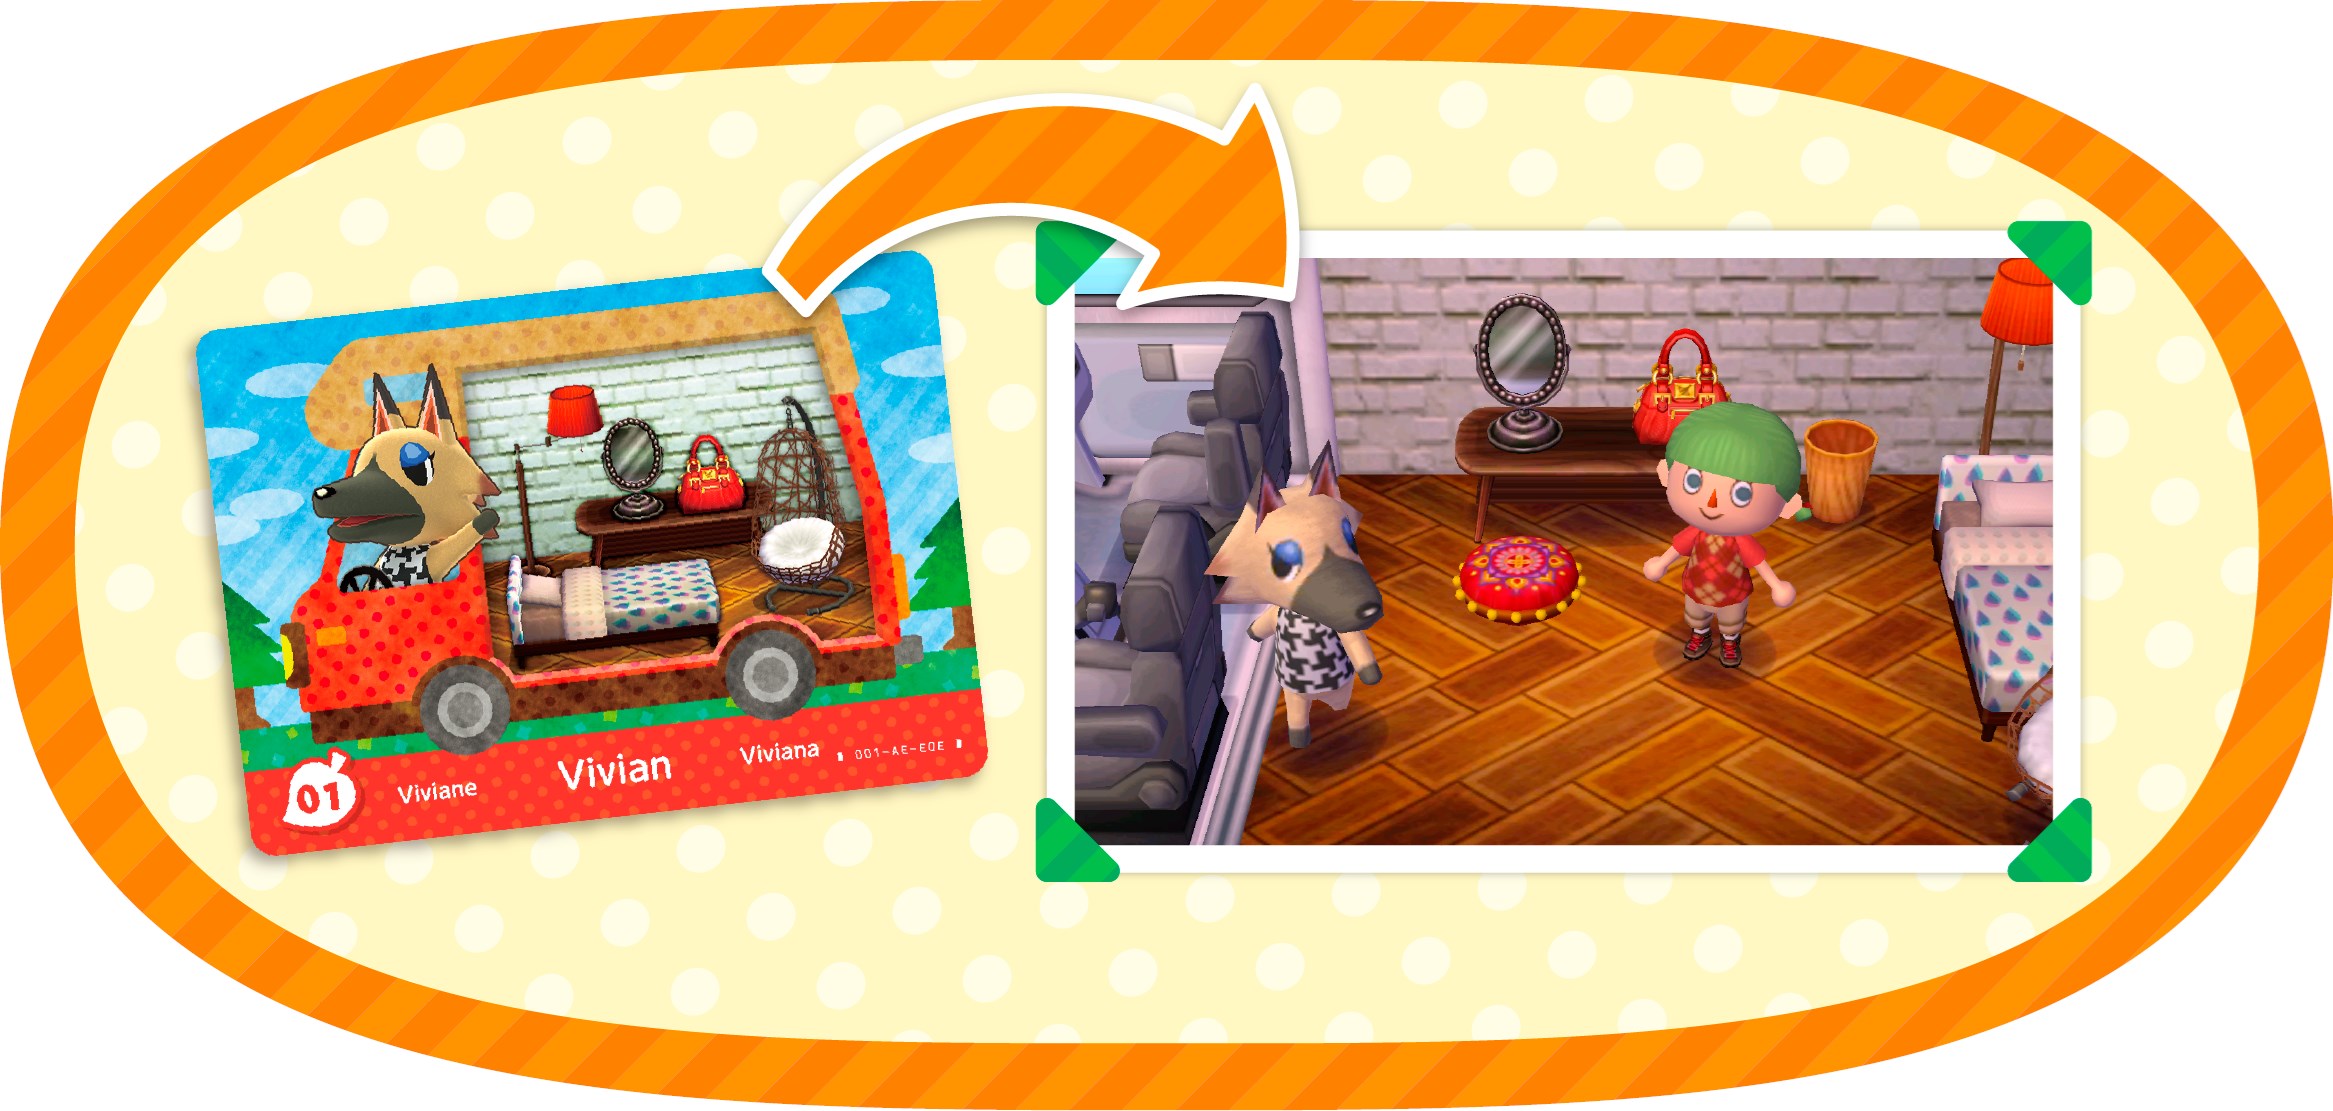 Animal Crossing: New Leaf - Welcome amiibo screenshots and art - Nintendo Everything